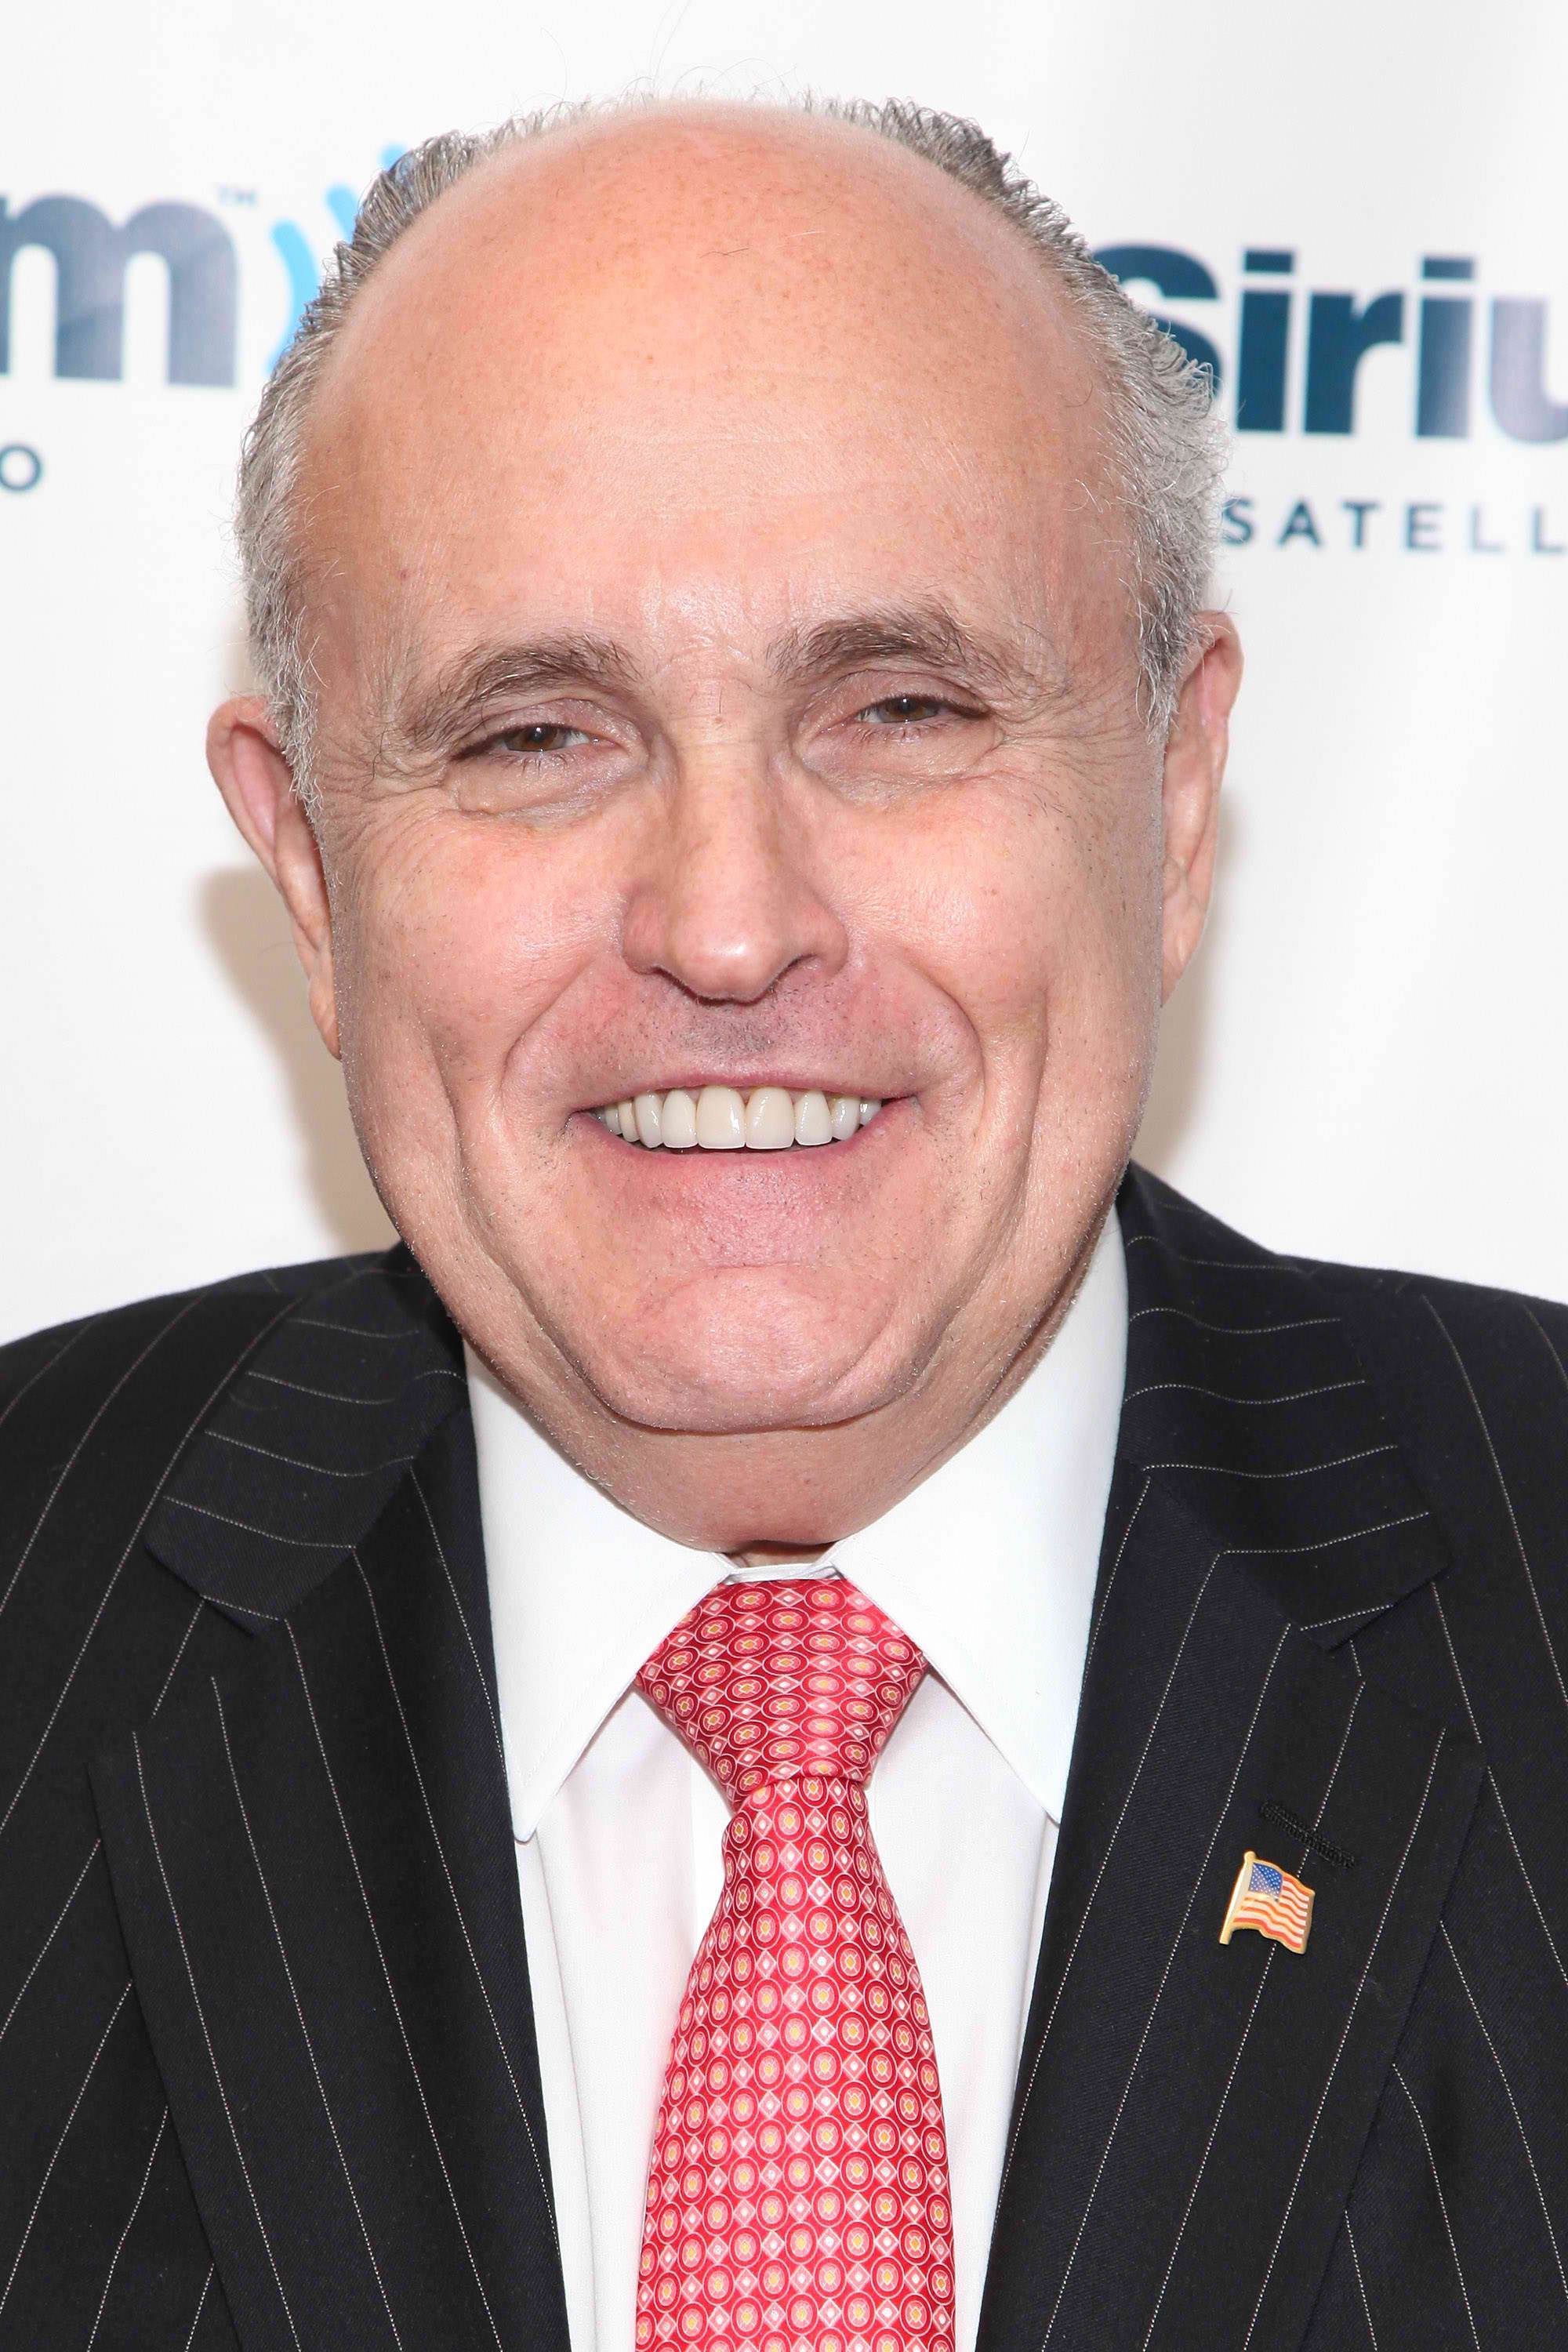 Spokeswoman For Rudy Giuliani Says He's 'Not Running For Mayor ...